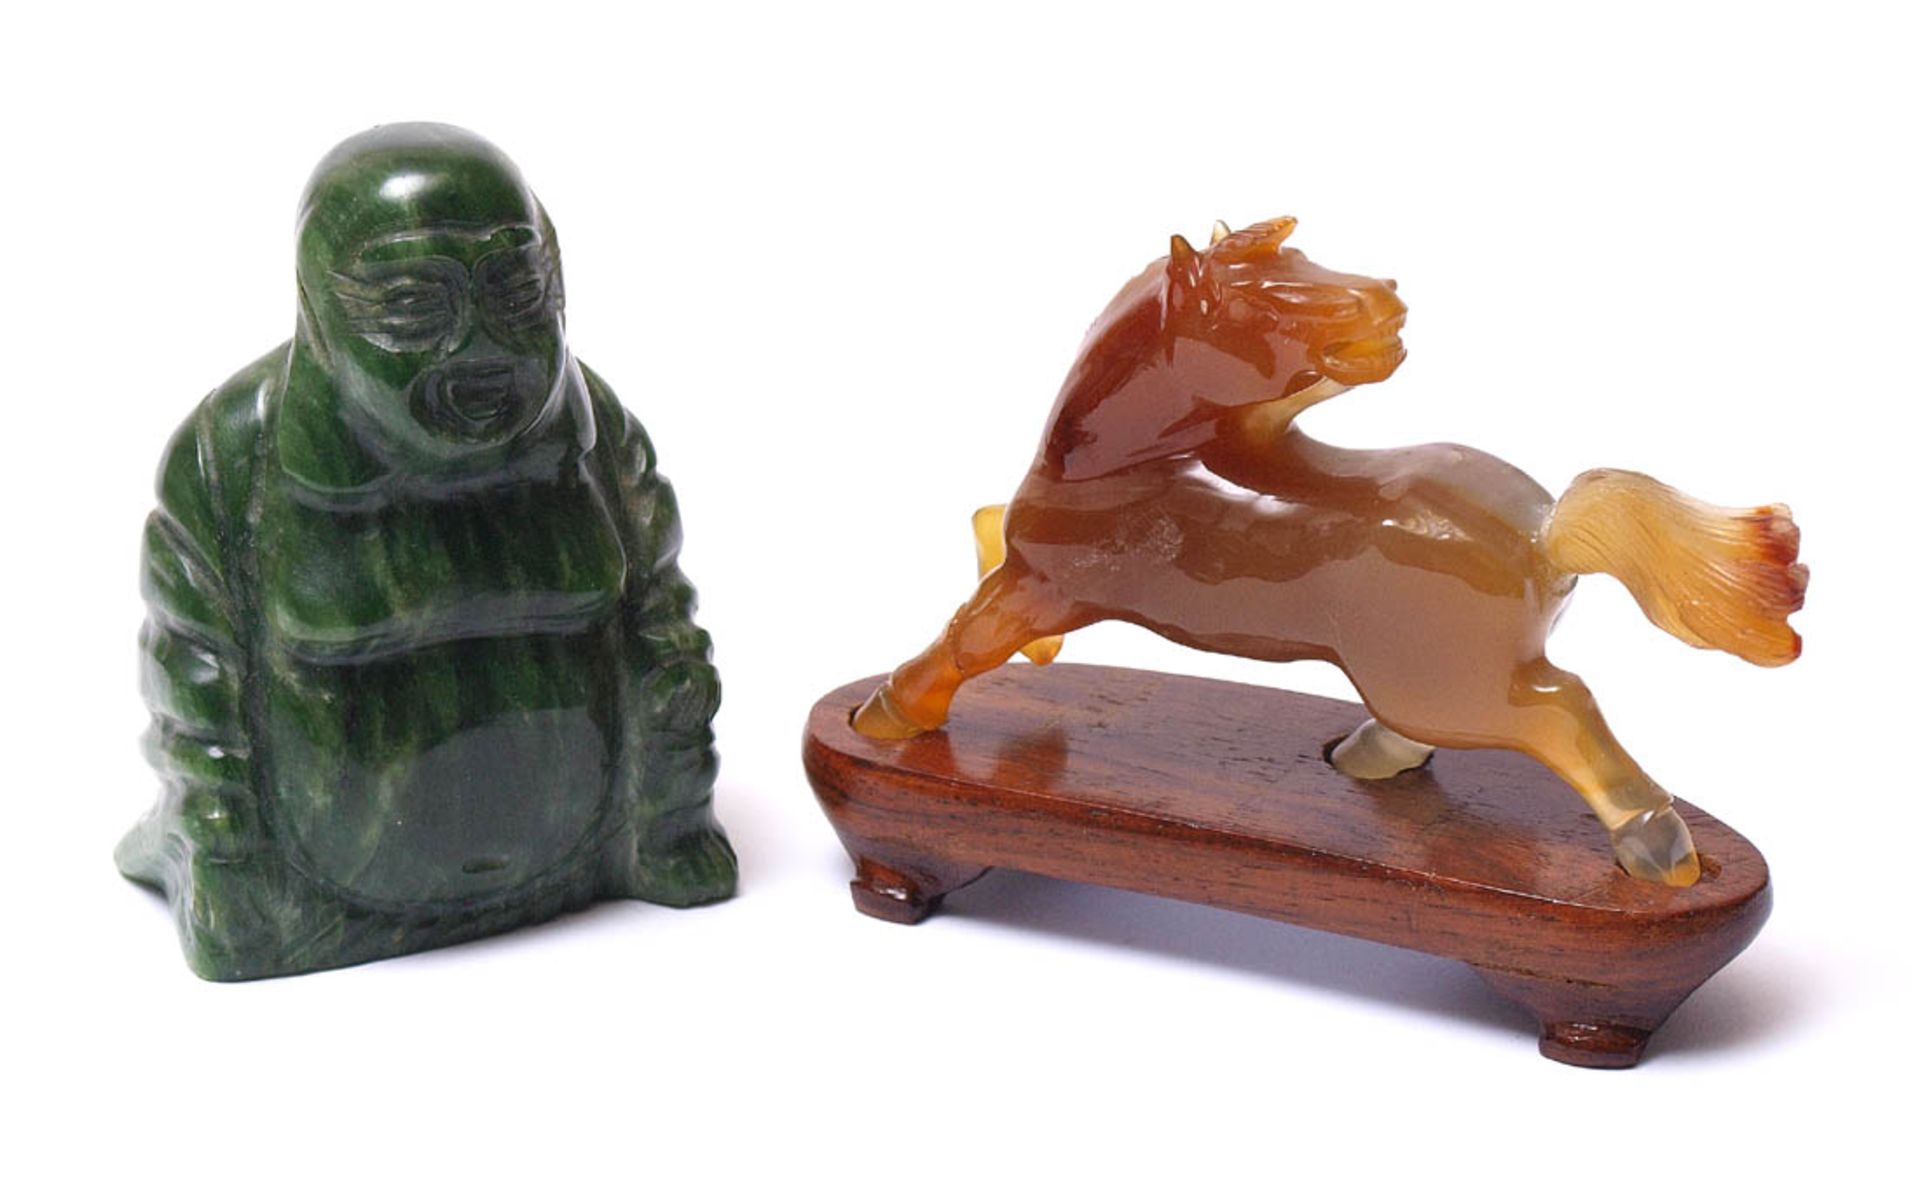 BuddhafigurGrüne Jade (?). H.8cm. Dazu Pferd aus geschnittenem rotbraunem Achat. L.9,5cm. Linker